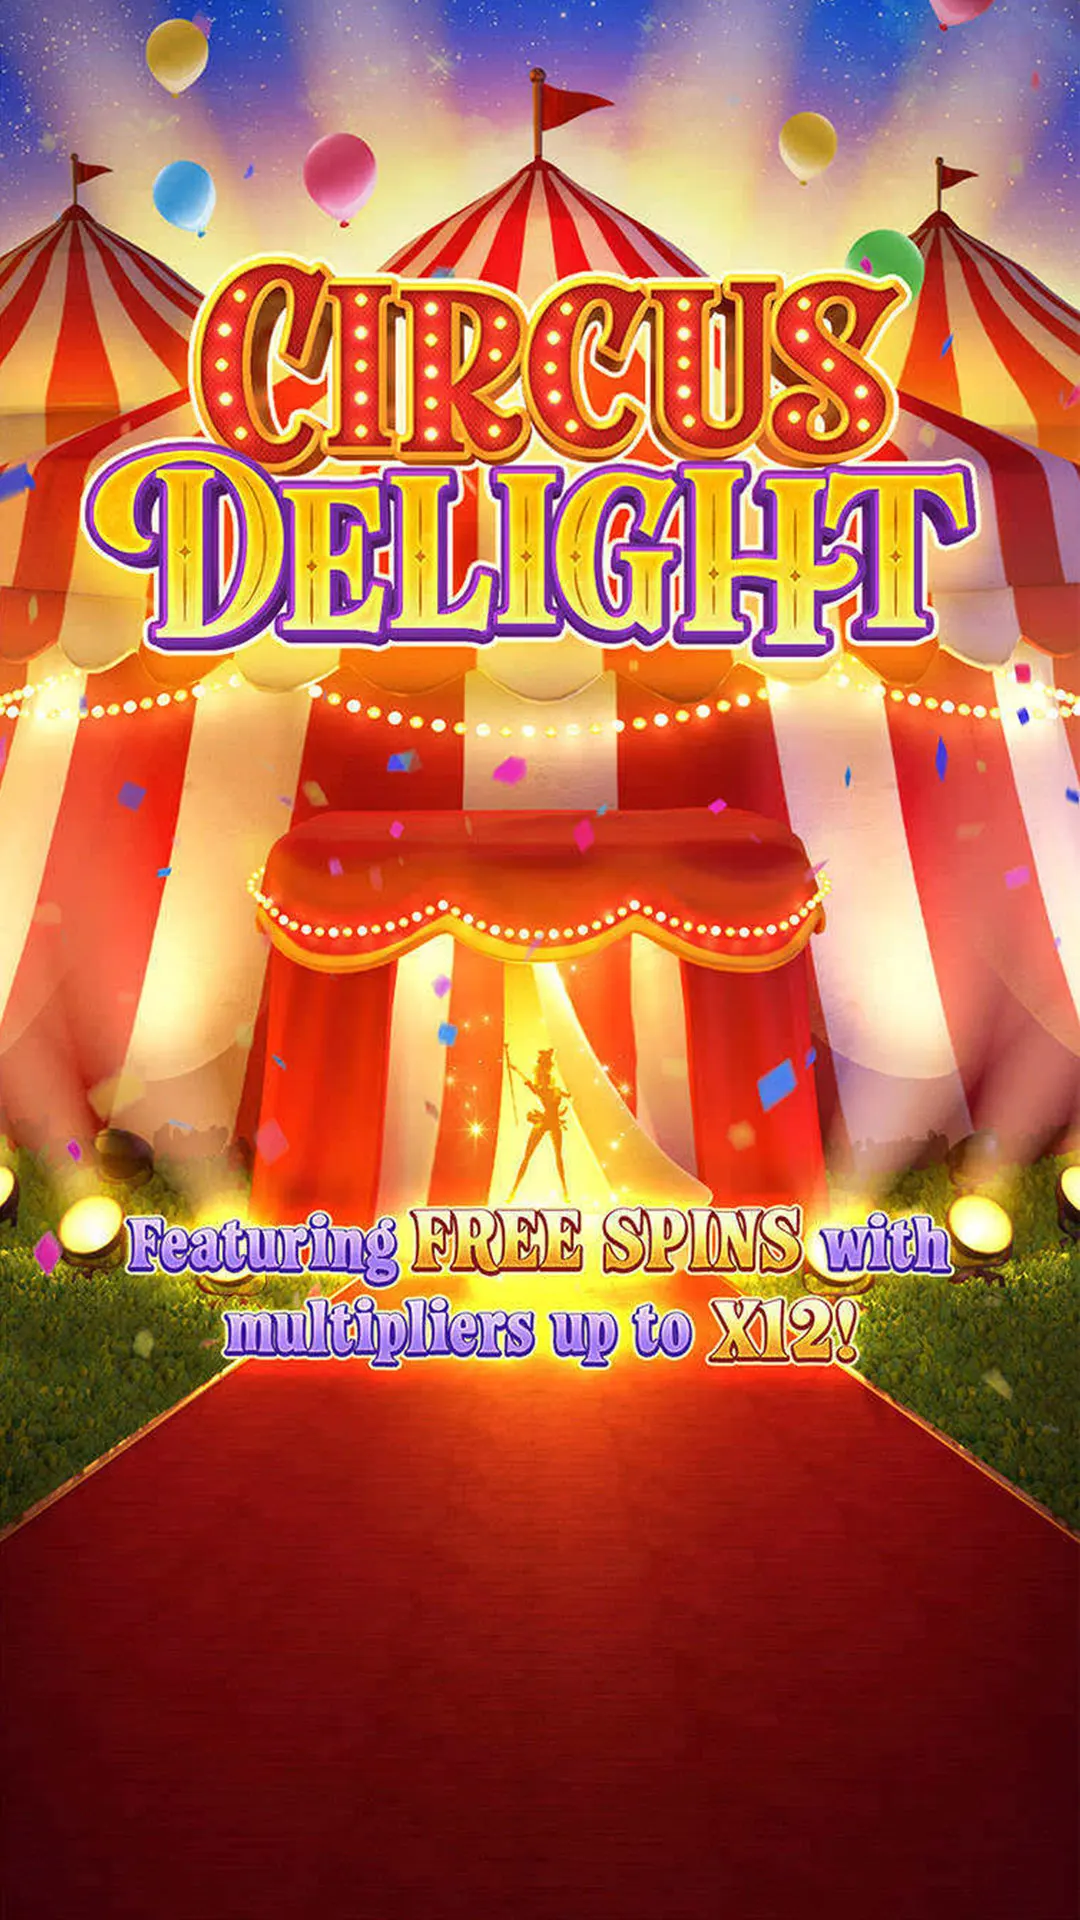 circus delight